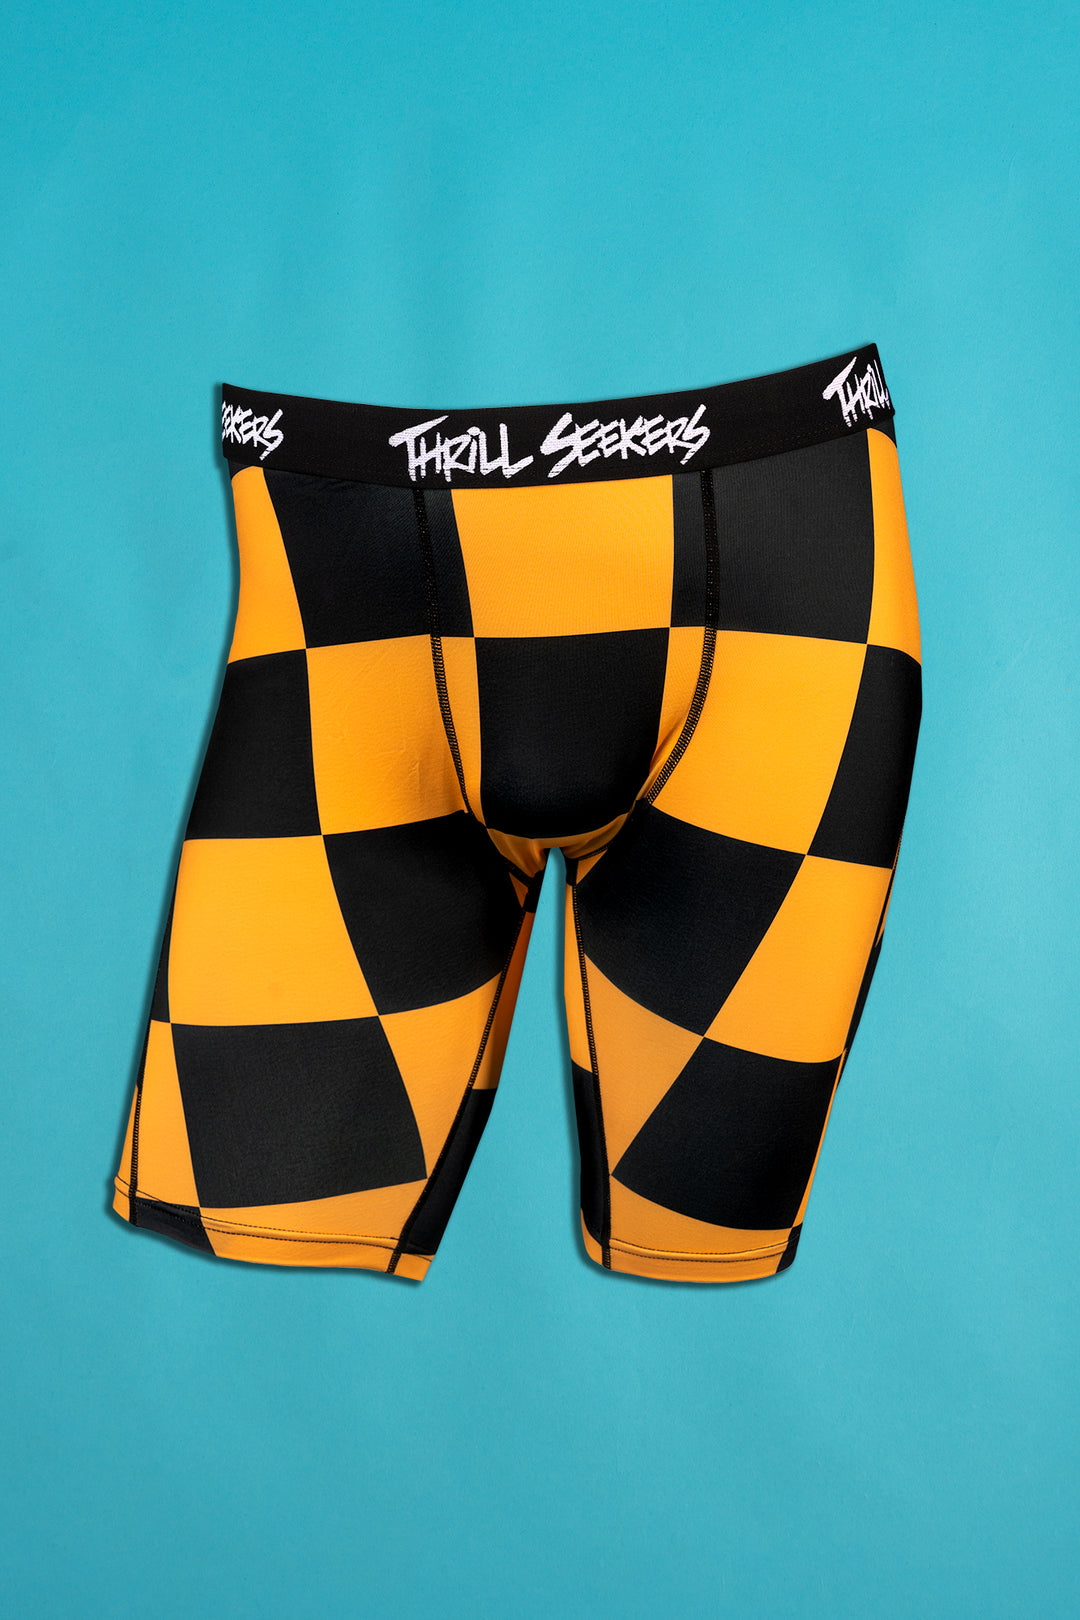 Thrill Seekers Yellow Checkered Fundies